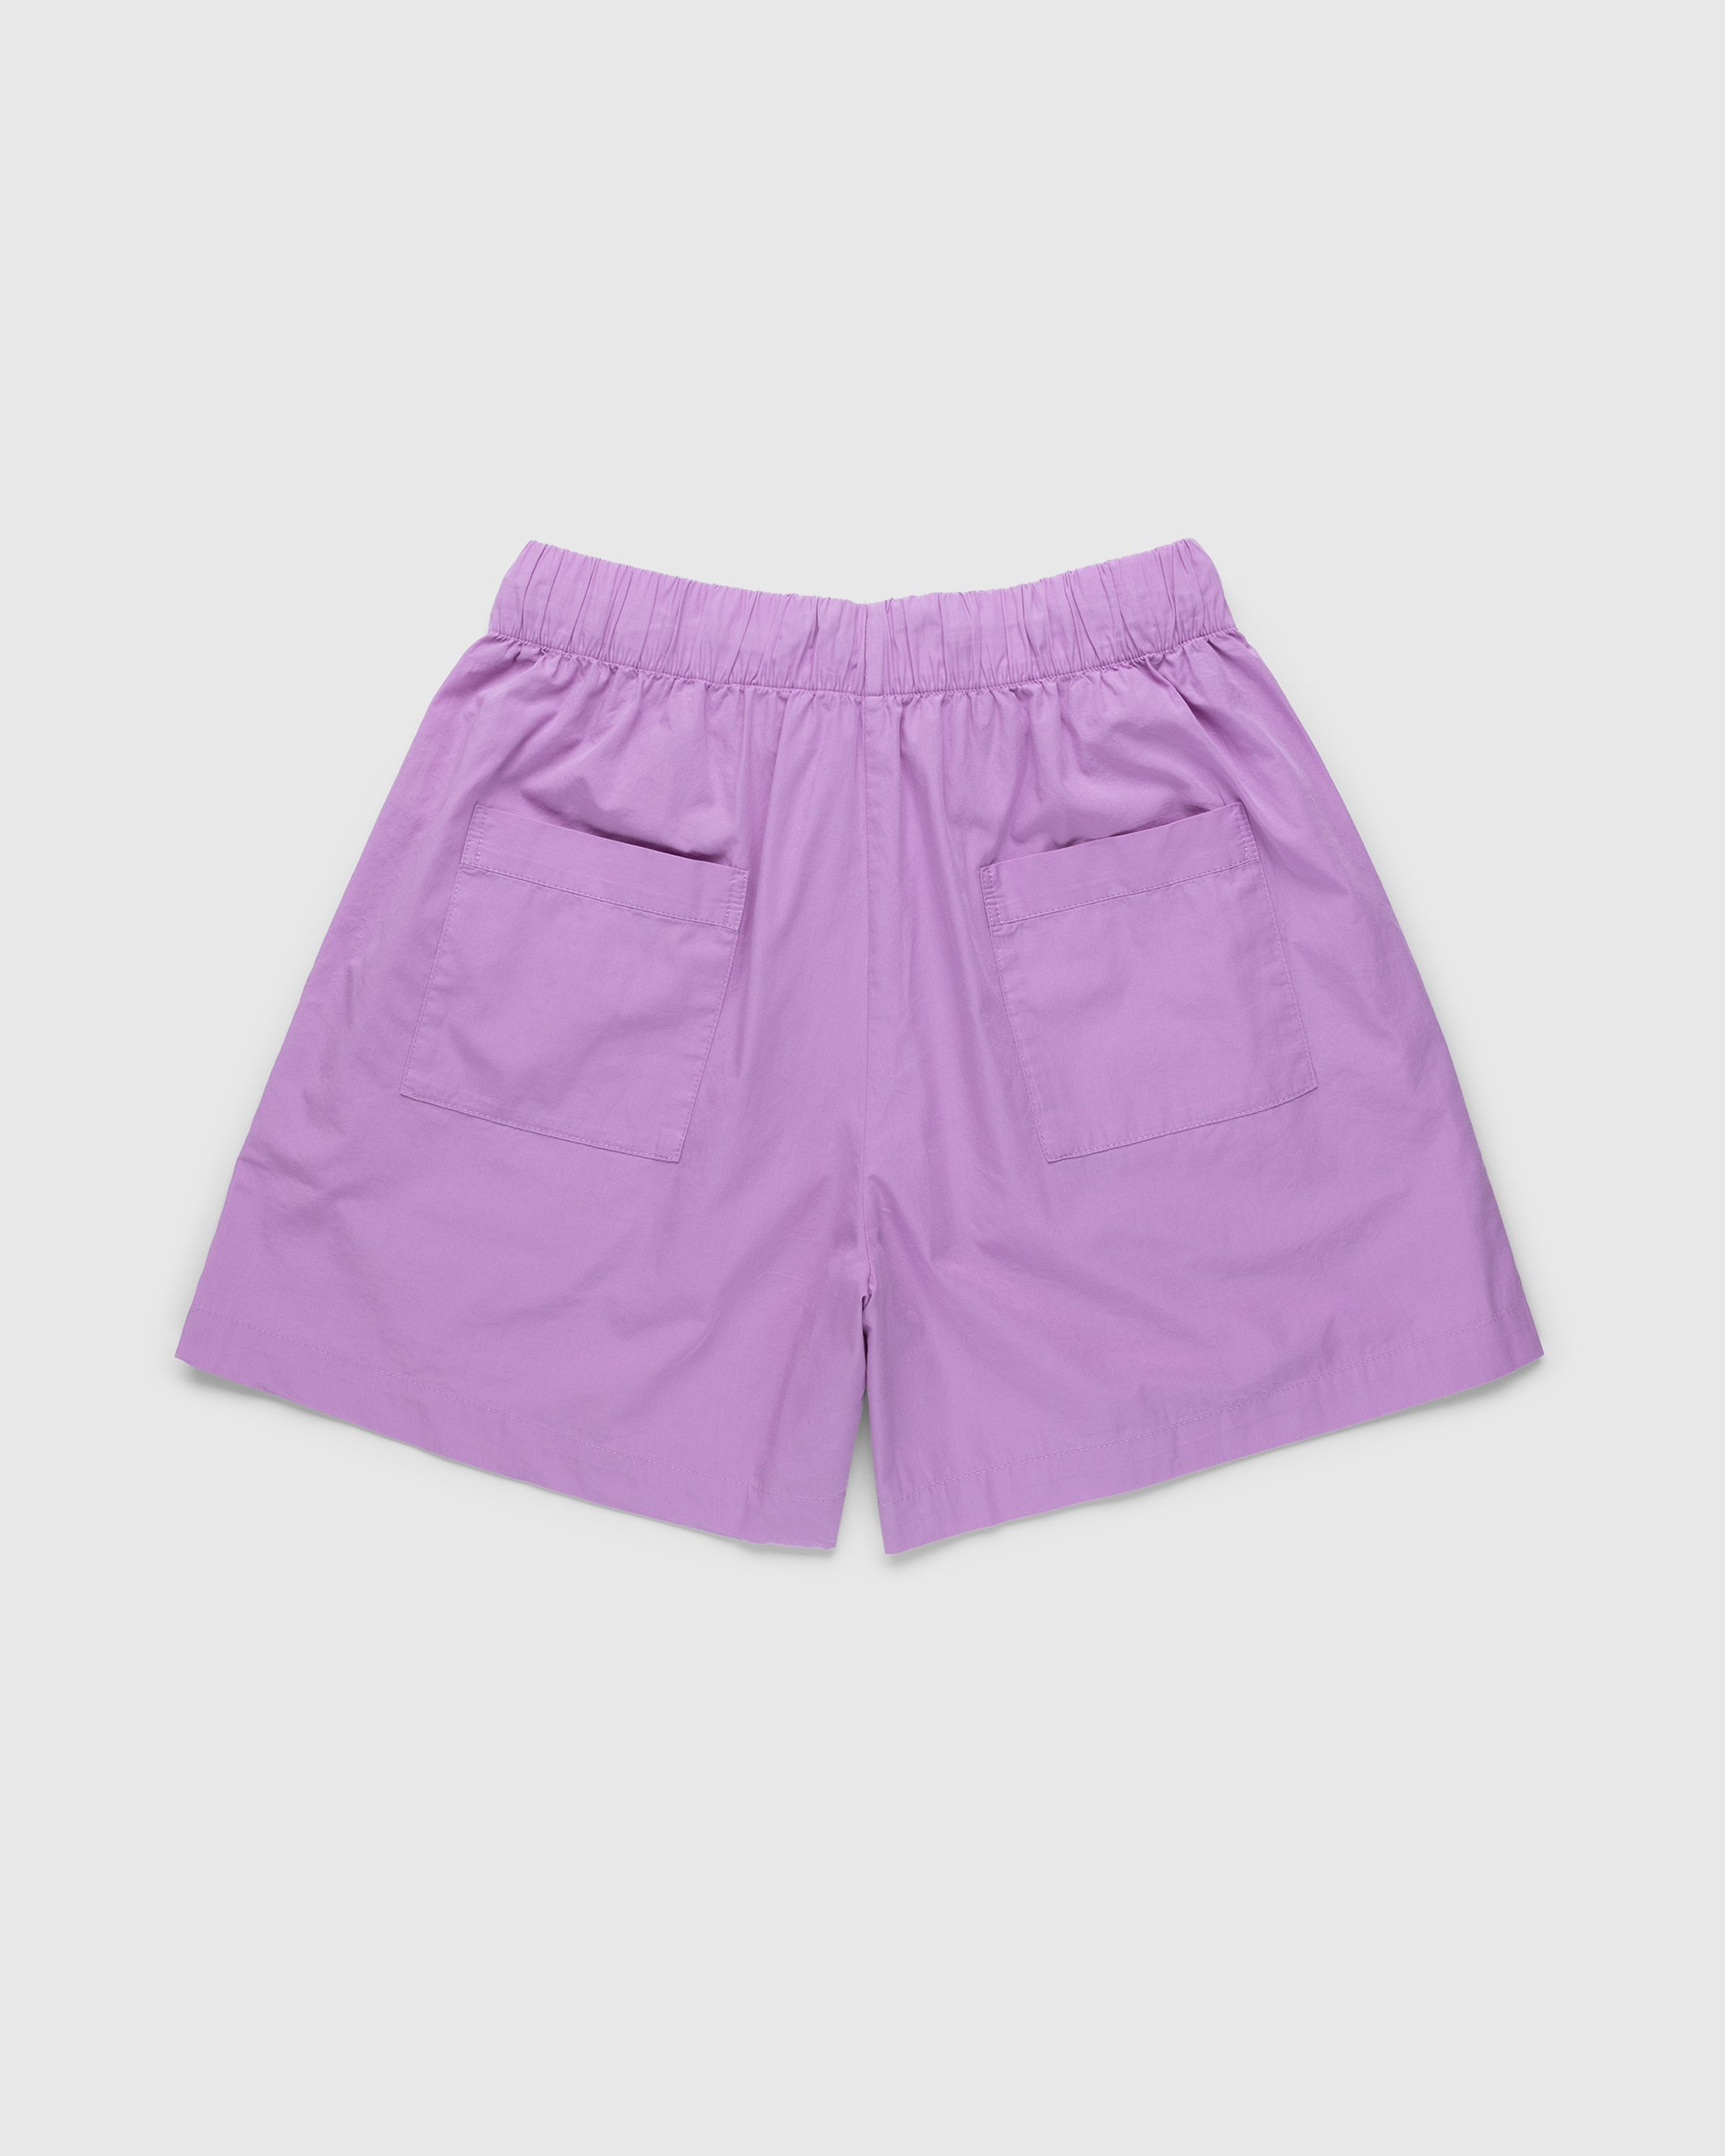 Tekla - Cotton Poplin Pyjamas Shorts Purple Pink - Clothing - Pink - Image 2